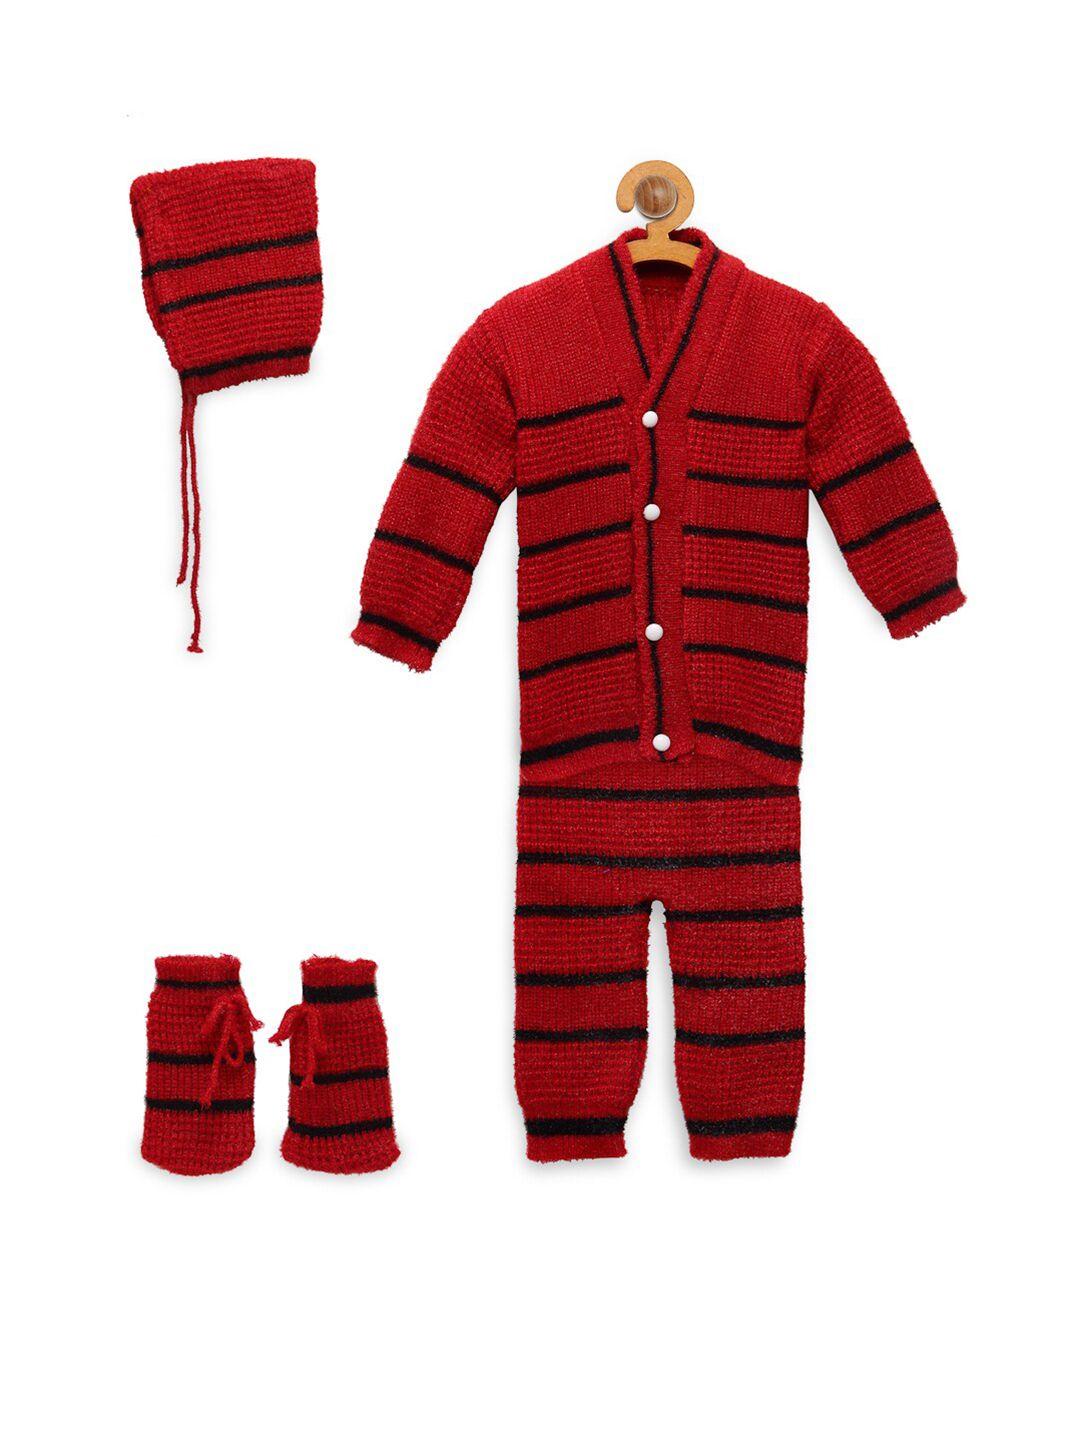 chutput unisex kids maroon & black striped hand knitted crochet pure wool clothing set